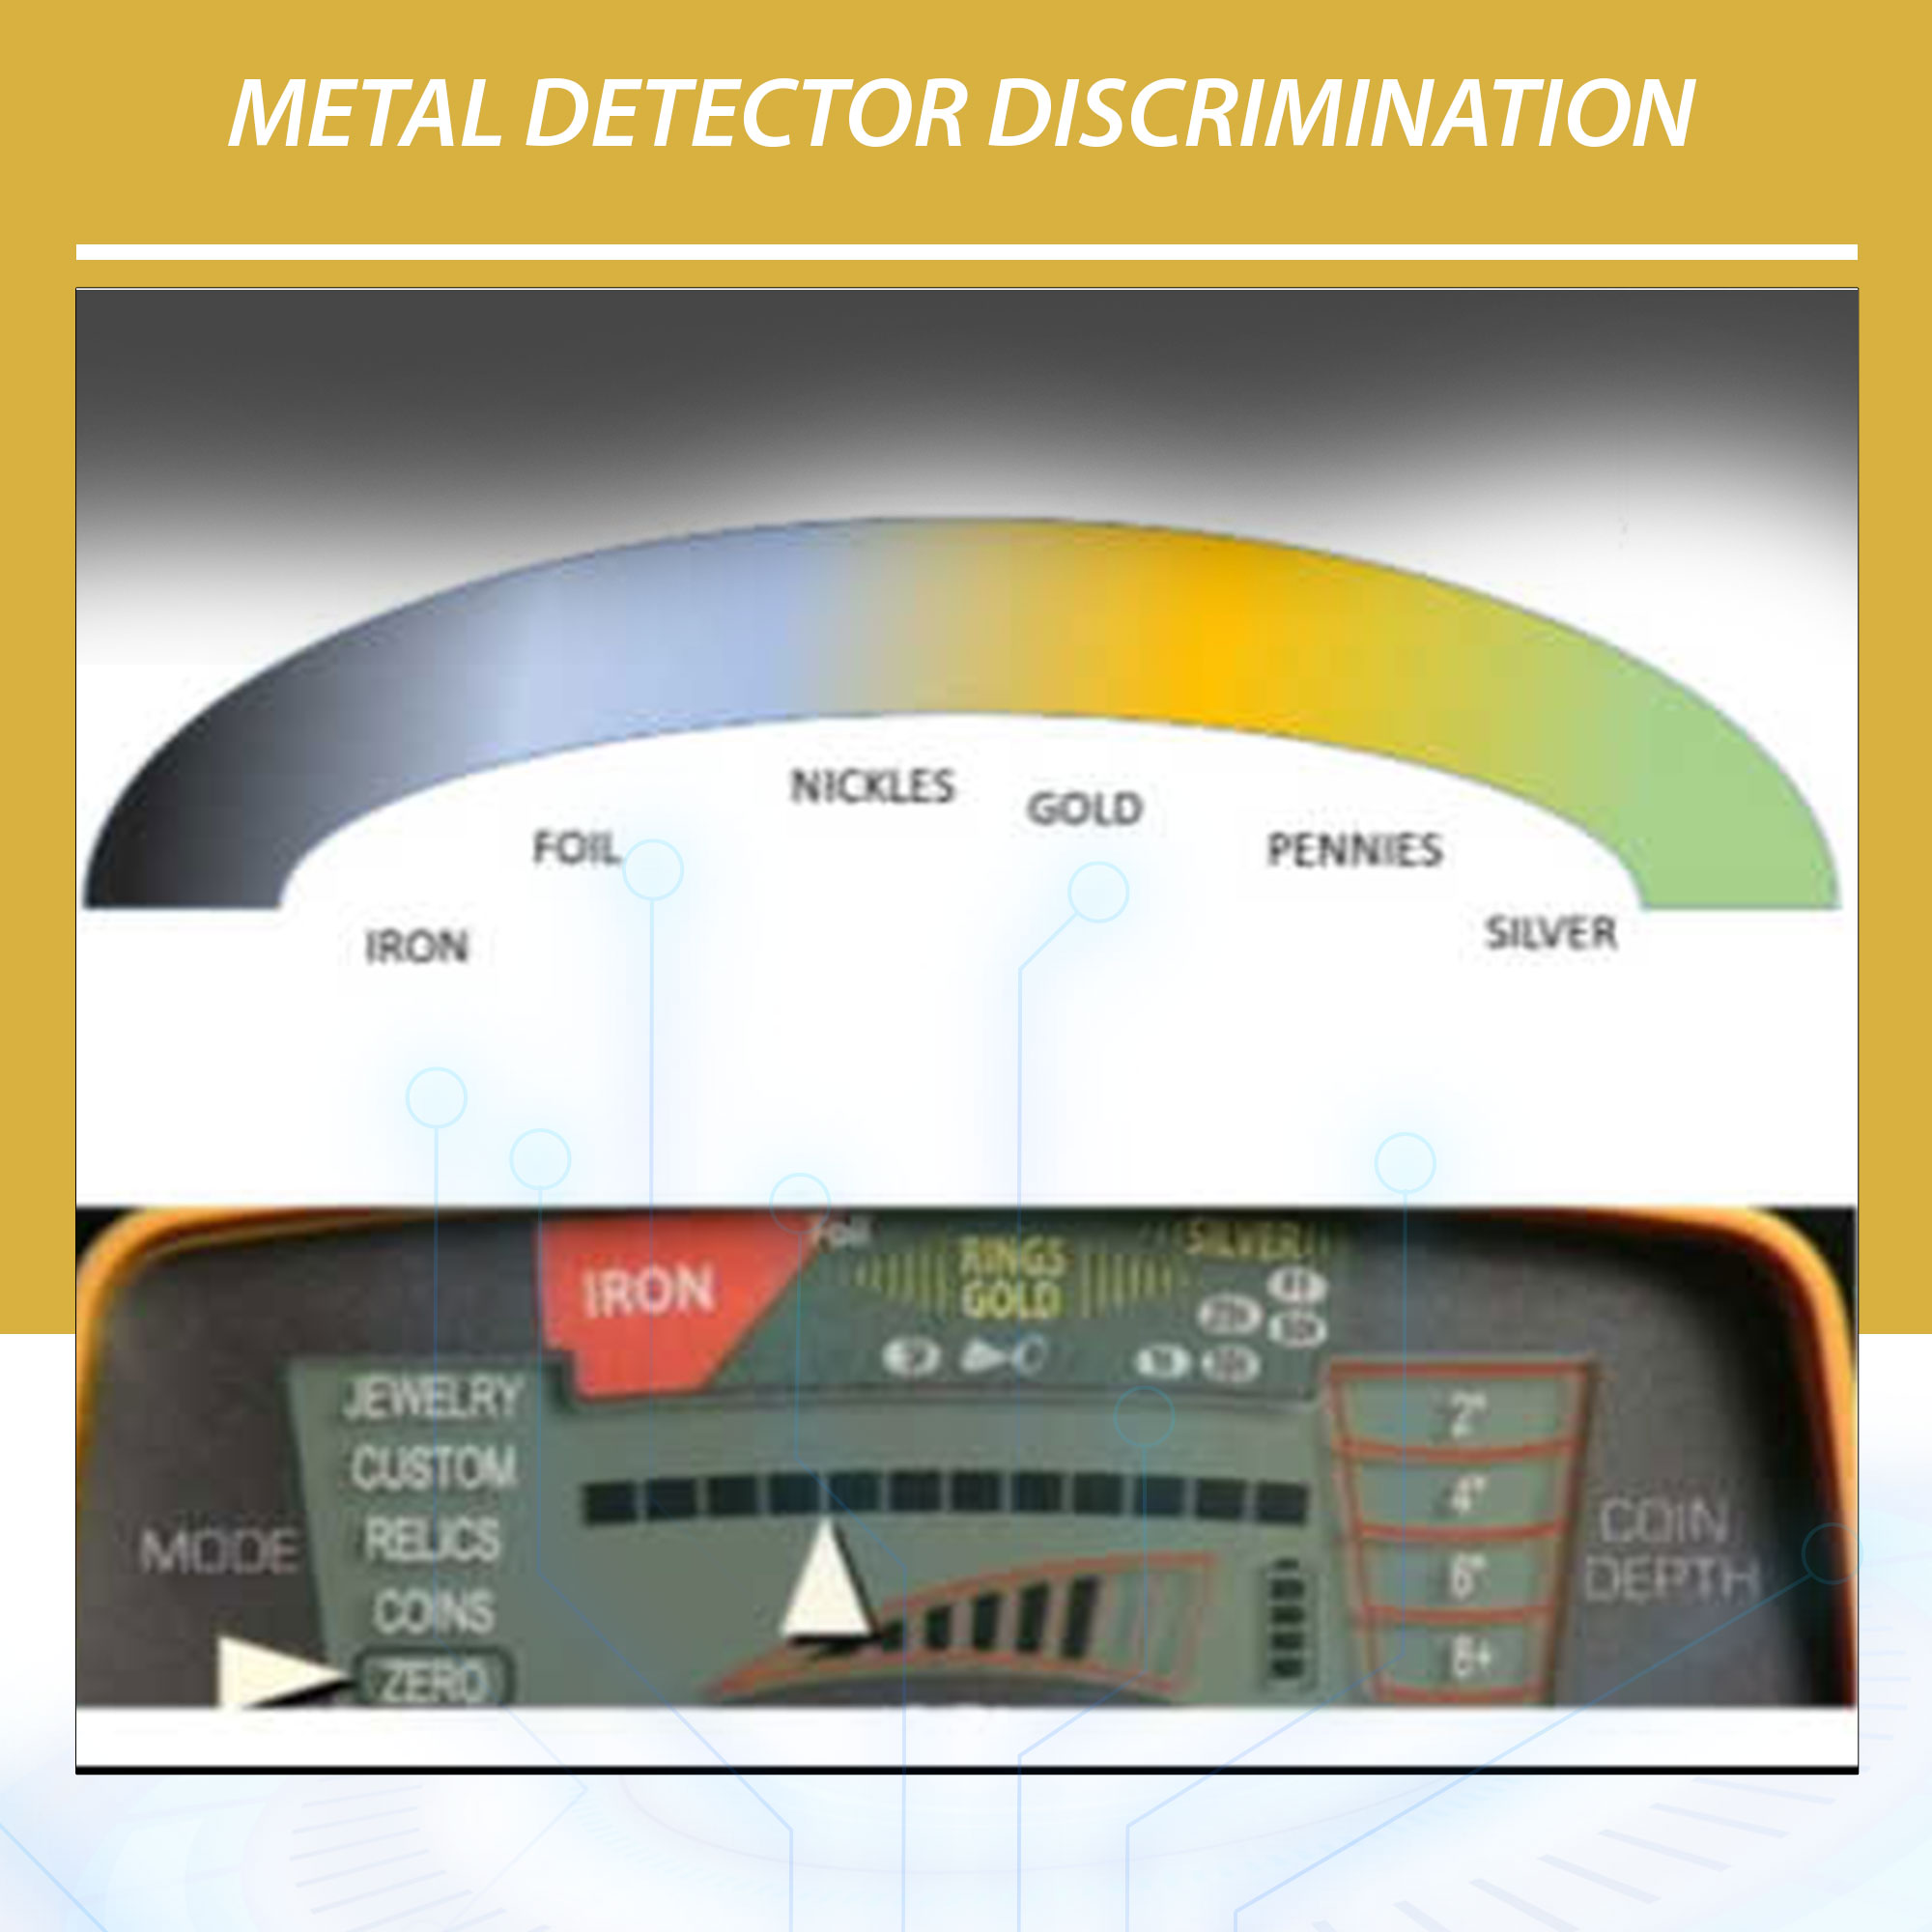 Metal Detector Discrimination